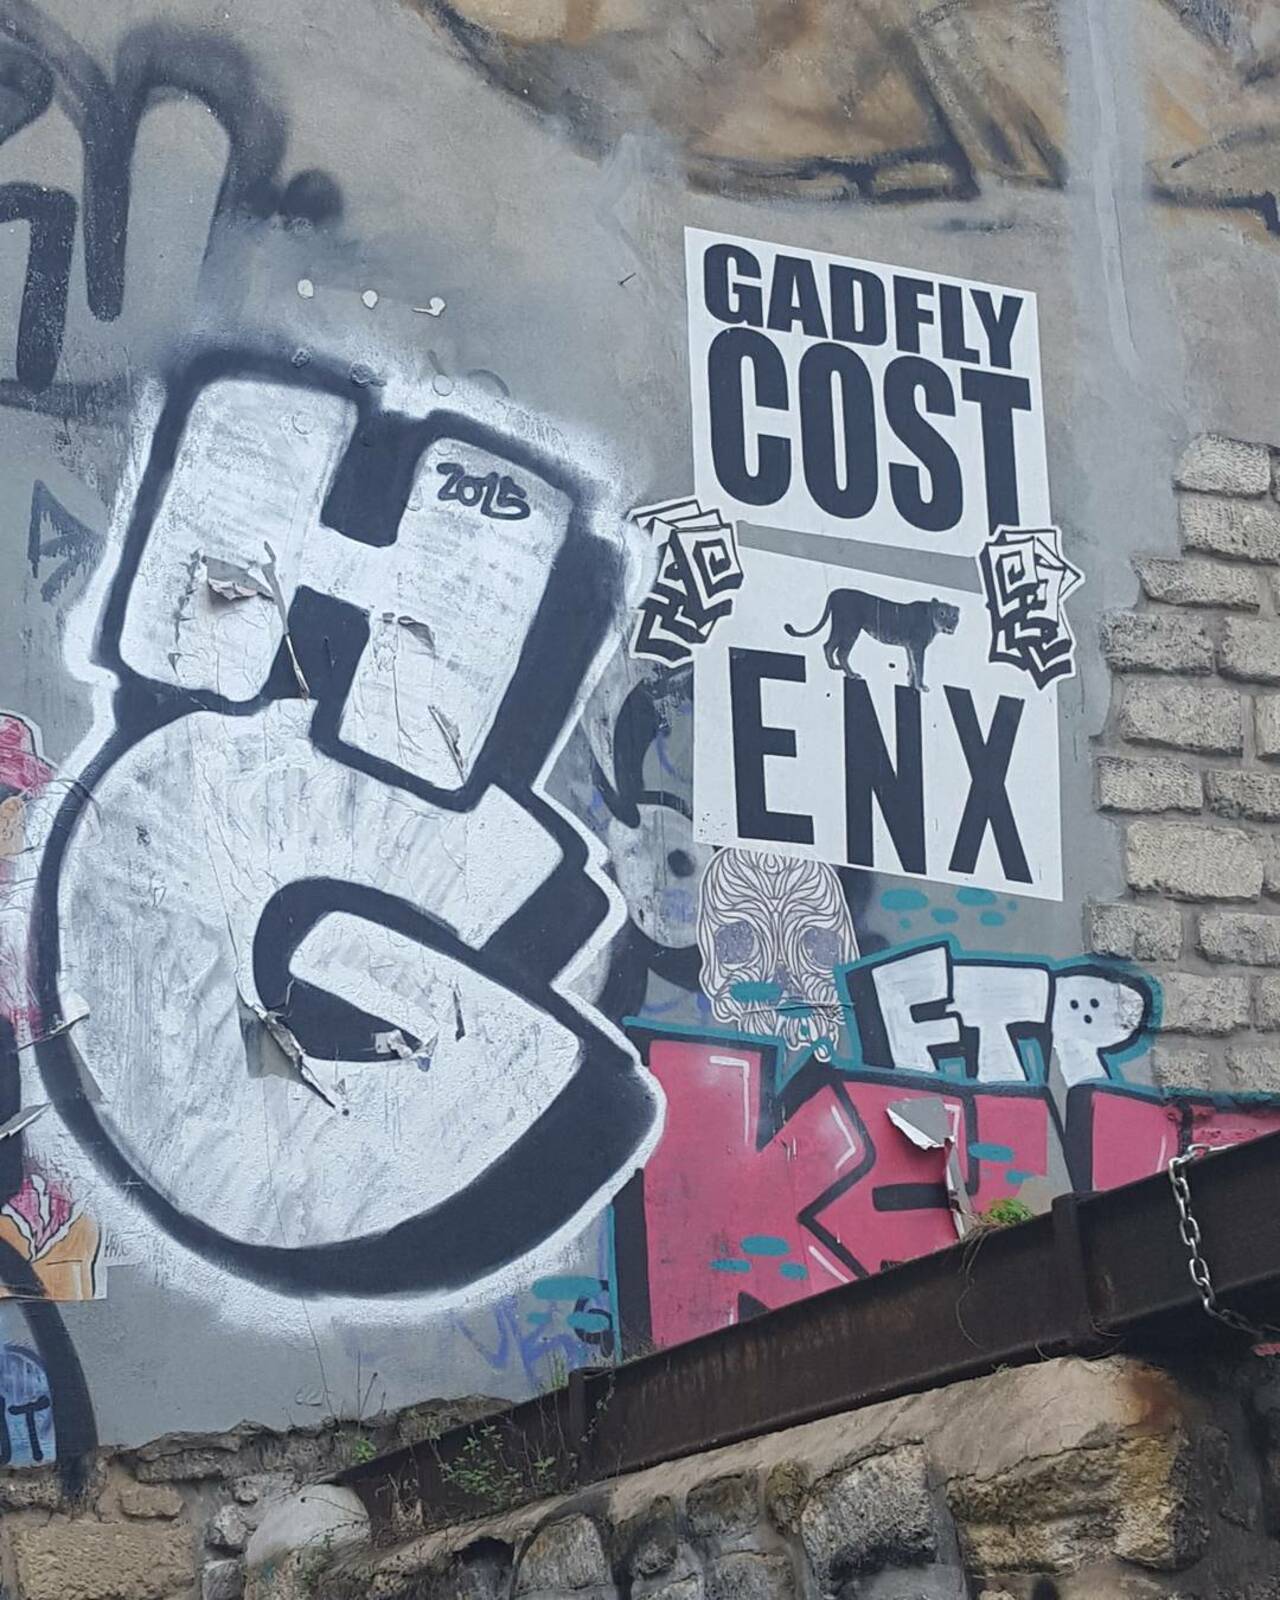 #Paris #graffiti photo by @jdewey67 http://ift.tt/1LFGSAv #StreetArt http://t.co/DGFhShuH90